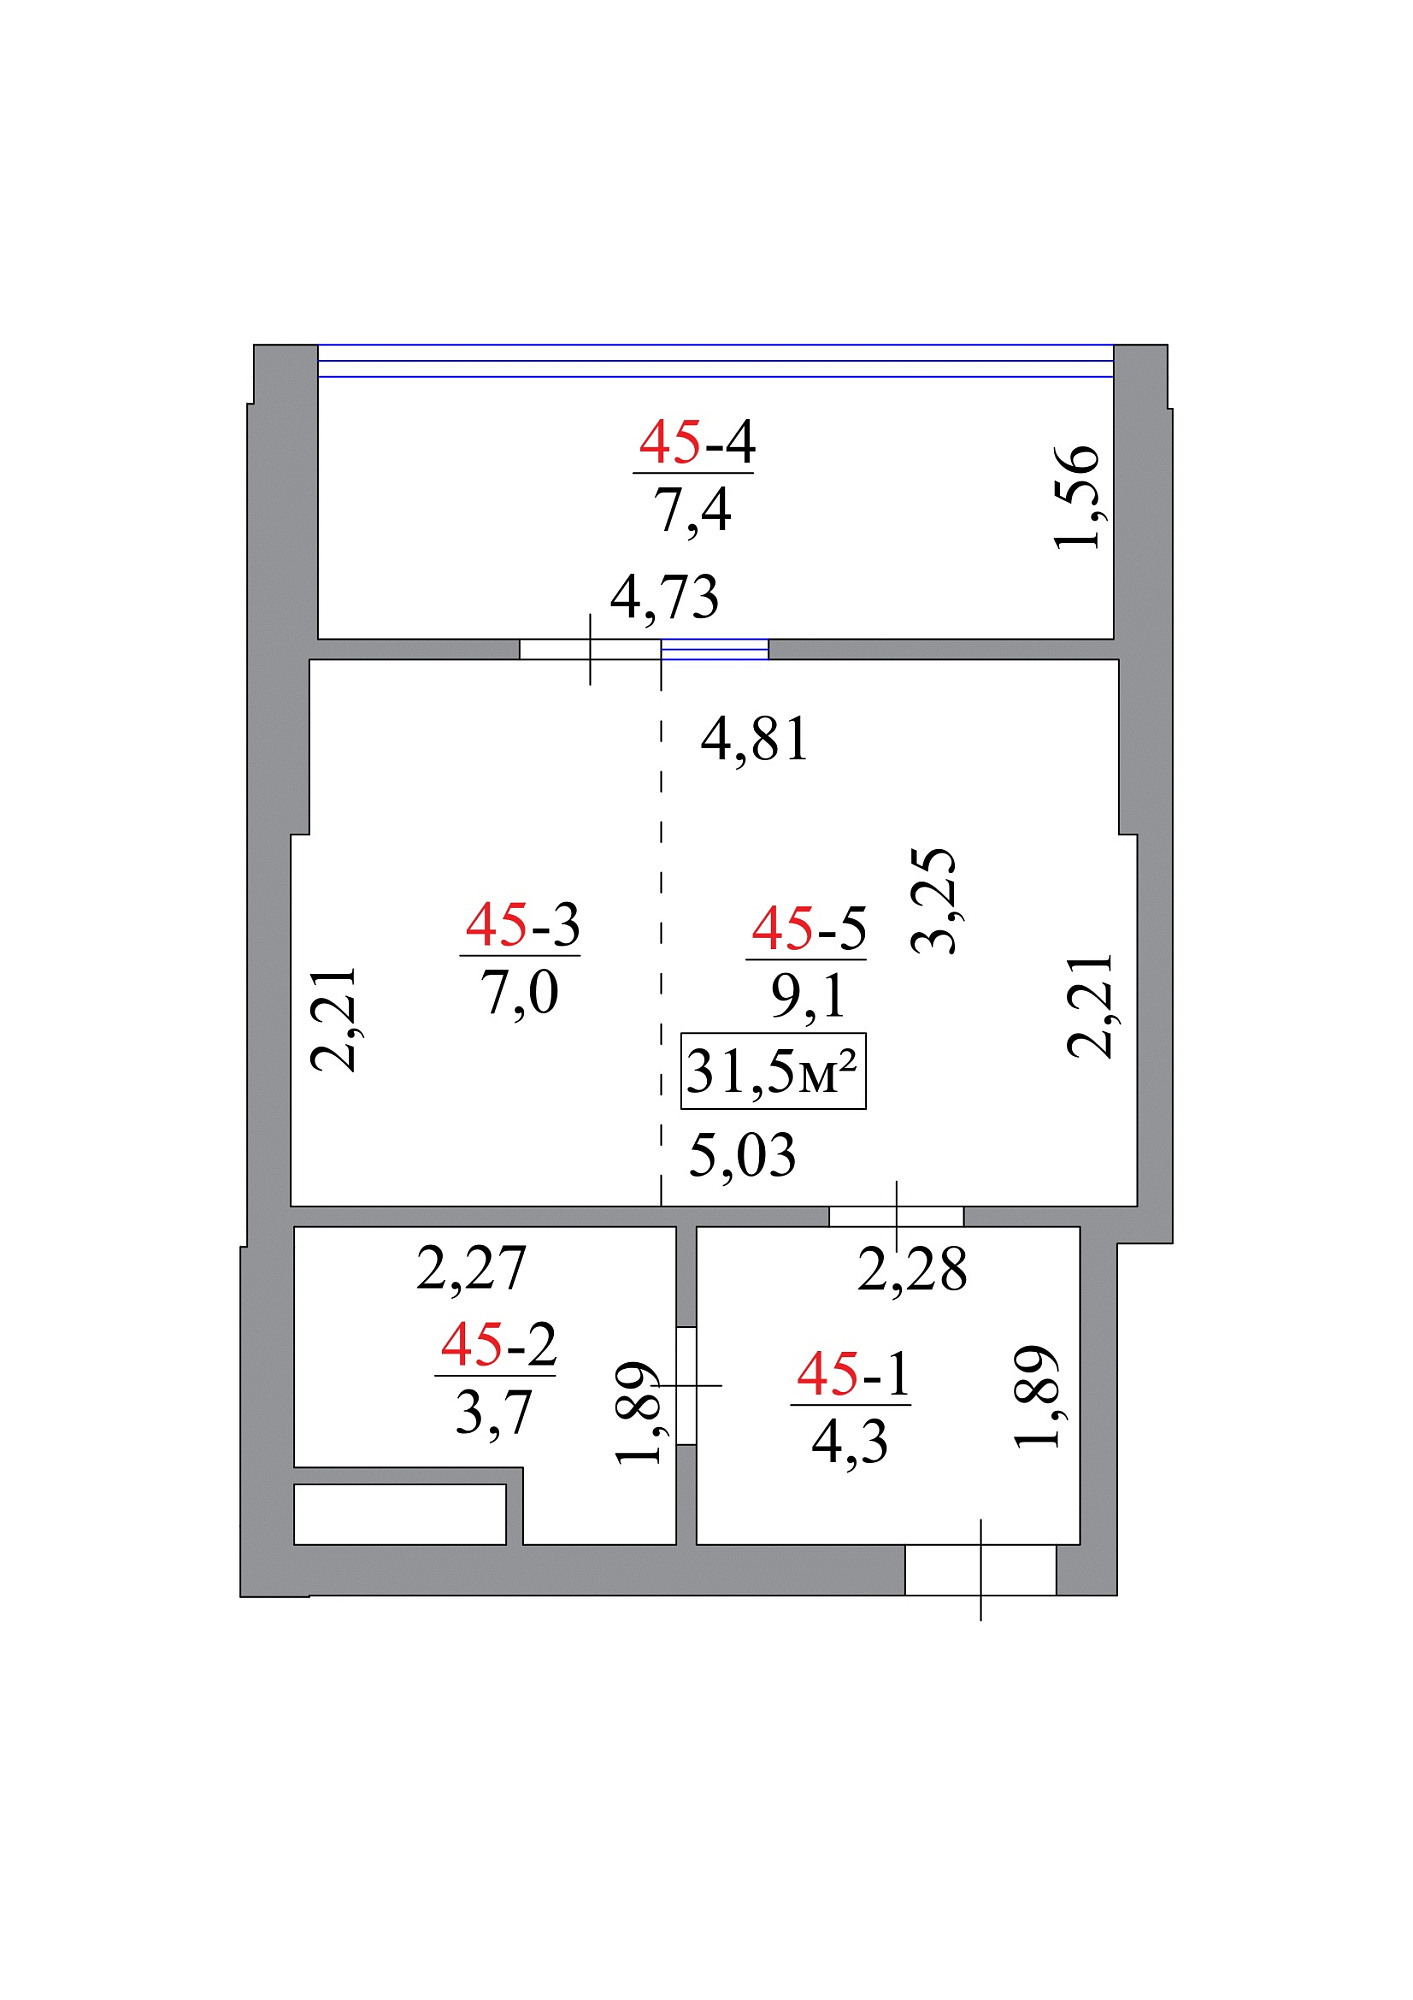 Planning Smart flats area 31.5m2, AB-07-05/00041.